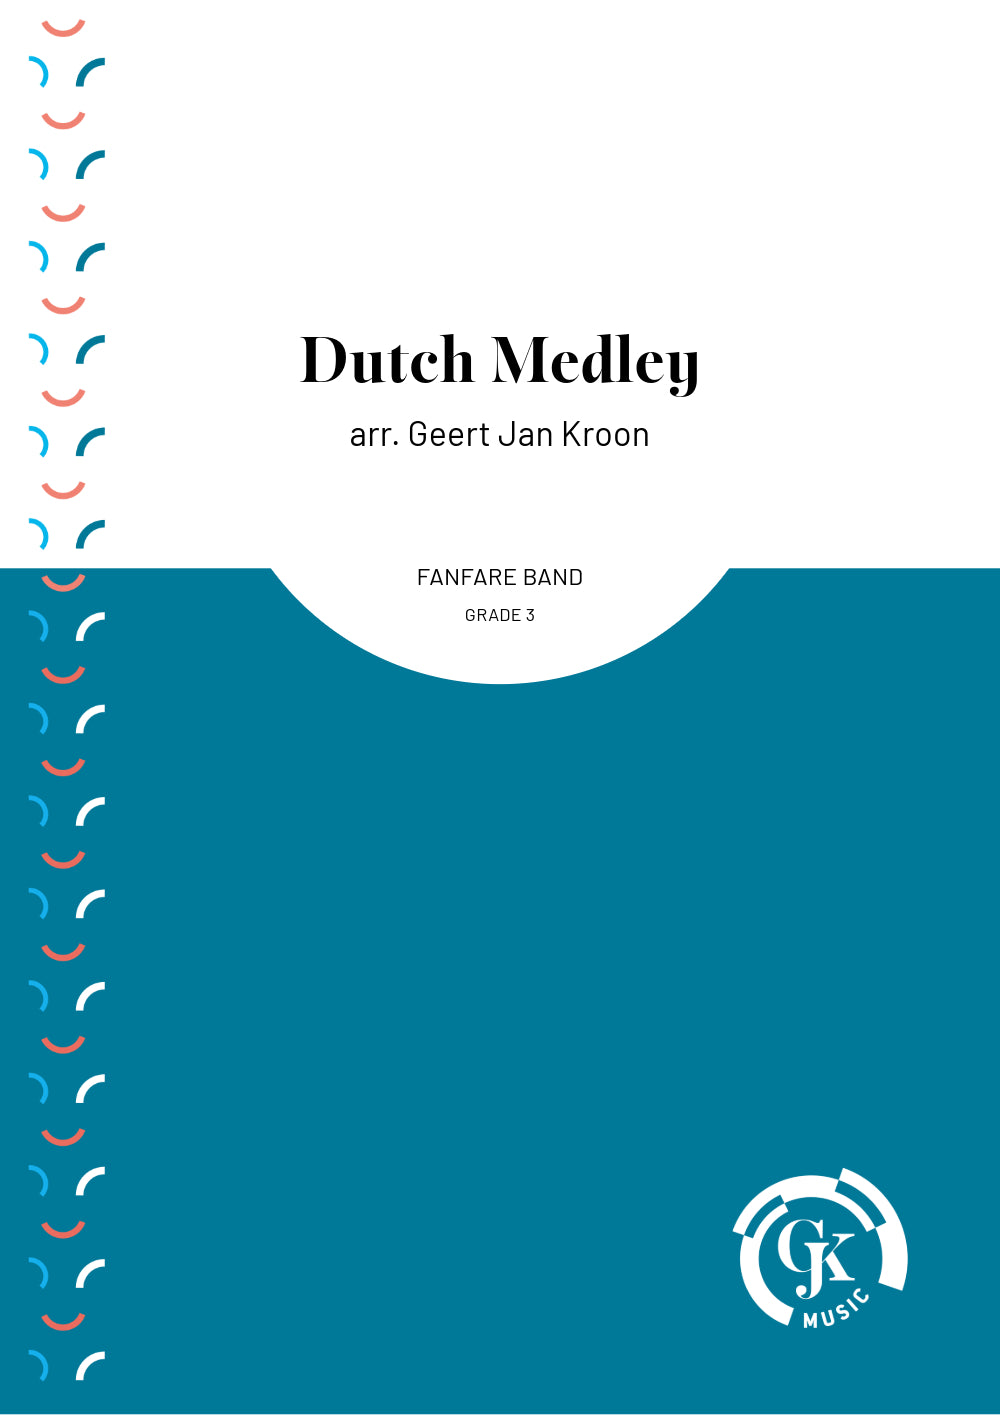 Dutch Medley - Fanfare